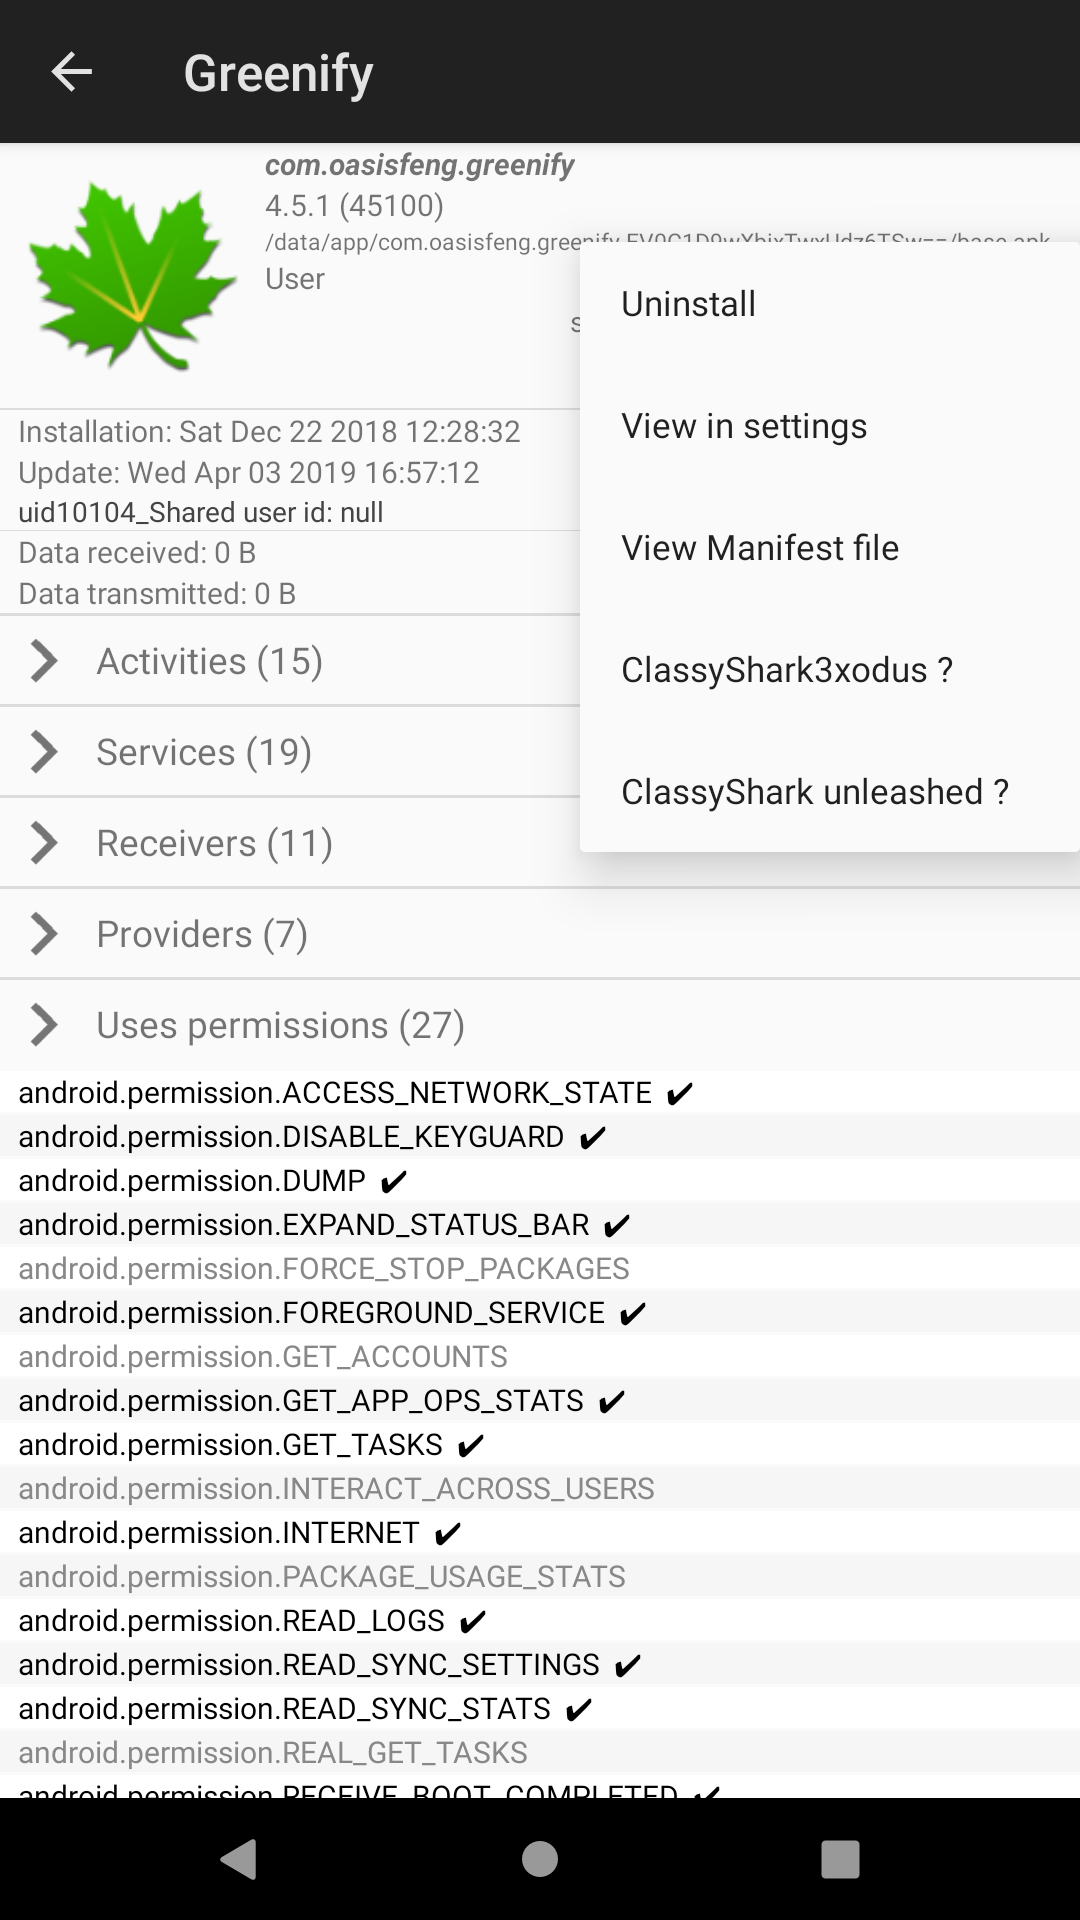 Screenshot of apps_Packages Info - Updated ApplicationsInfos (² 